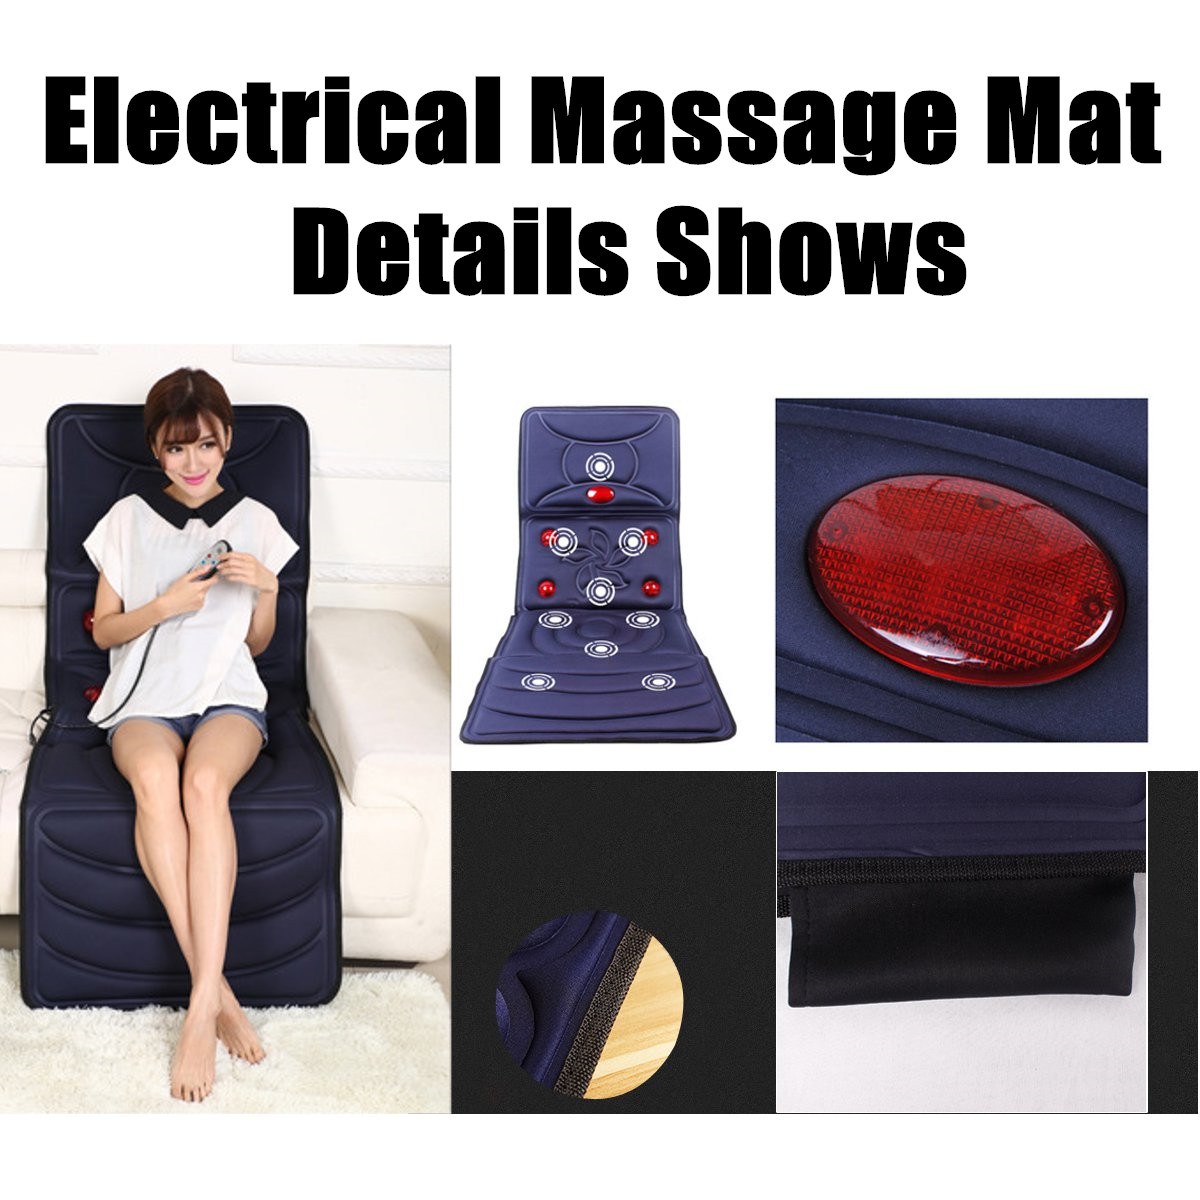 Infrared-Heating-Full-Body-Massage-Cushion-Heated-Therapy-Back-Massage-Chair-Cushion-Full-Body-Renmo-1938389-5